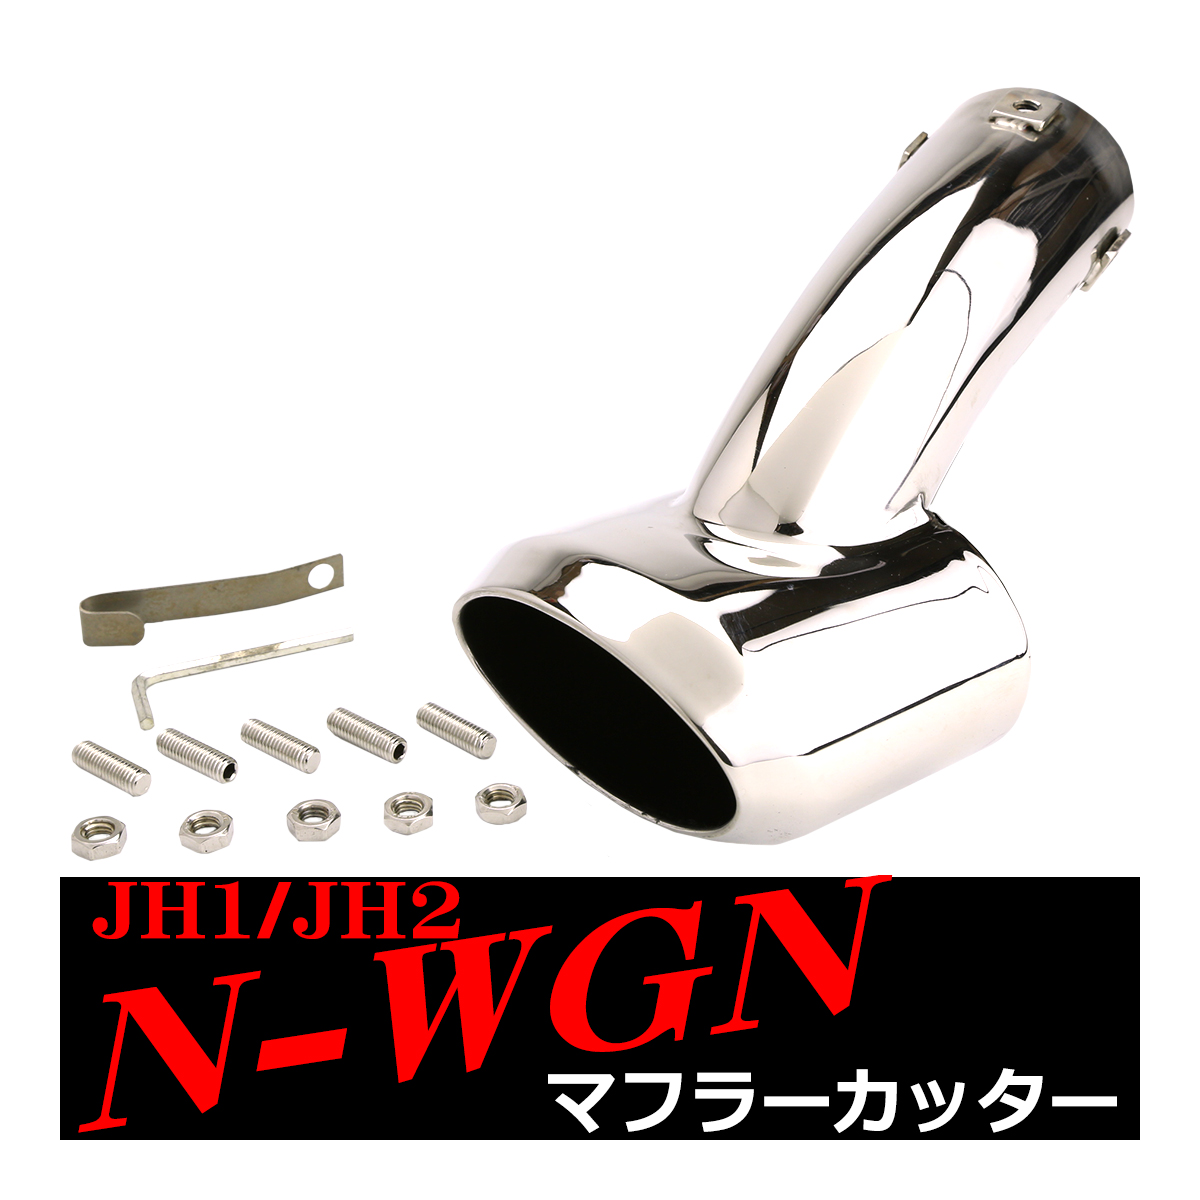 JH1/JH2 N-WGN マフラーカッター Nワゴン ステンレス オーバル形状タイプ SZ172